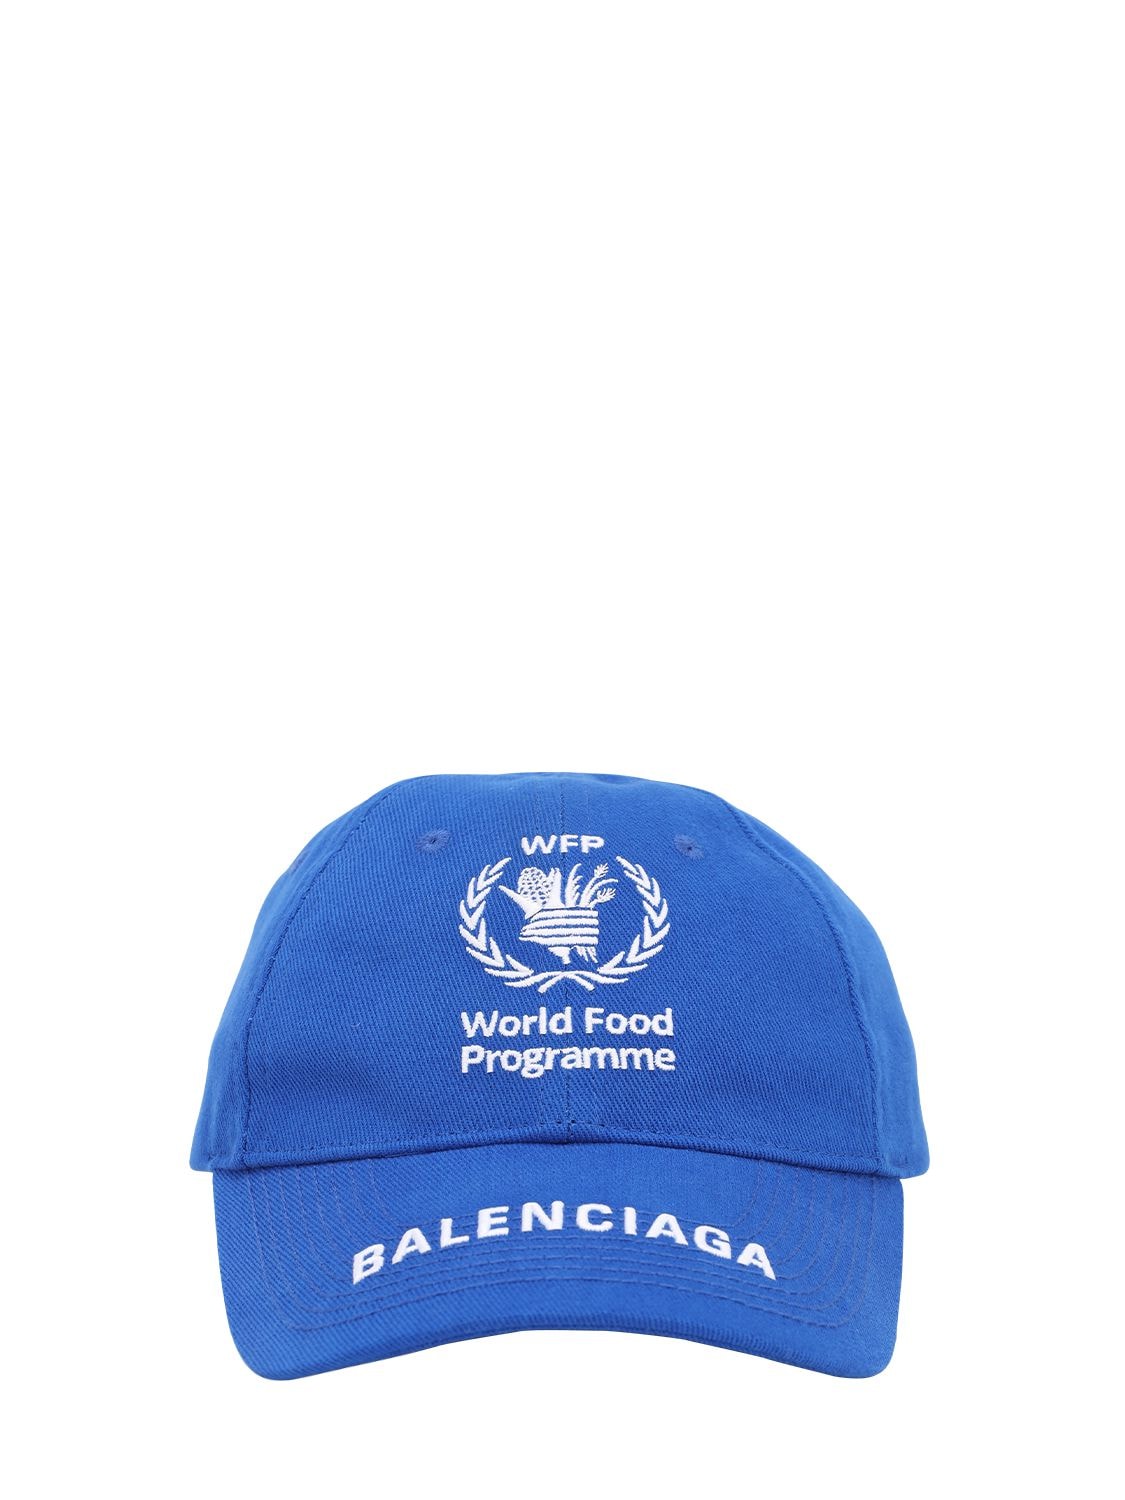 BALENCIAGA SUSTAINABLE COTTON BASEBALL HAT,71I18H003-NDM3NW2